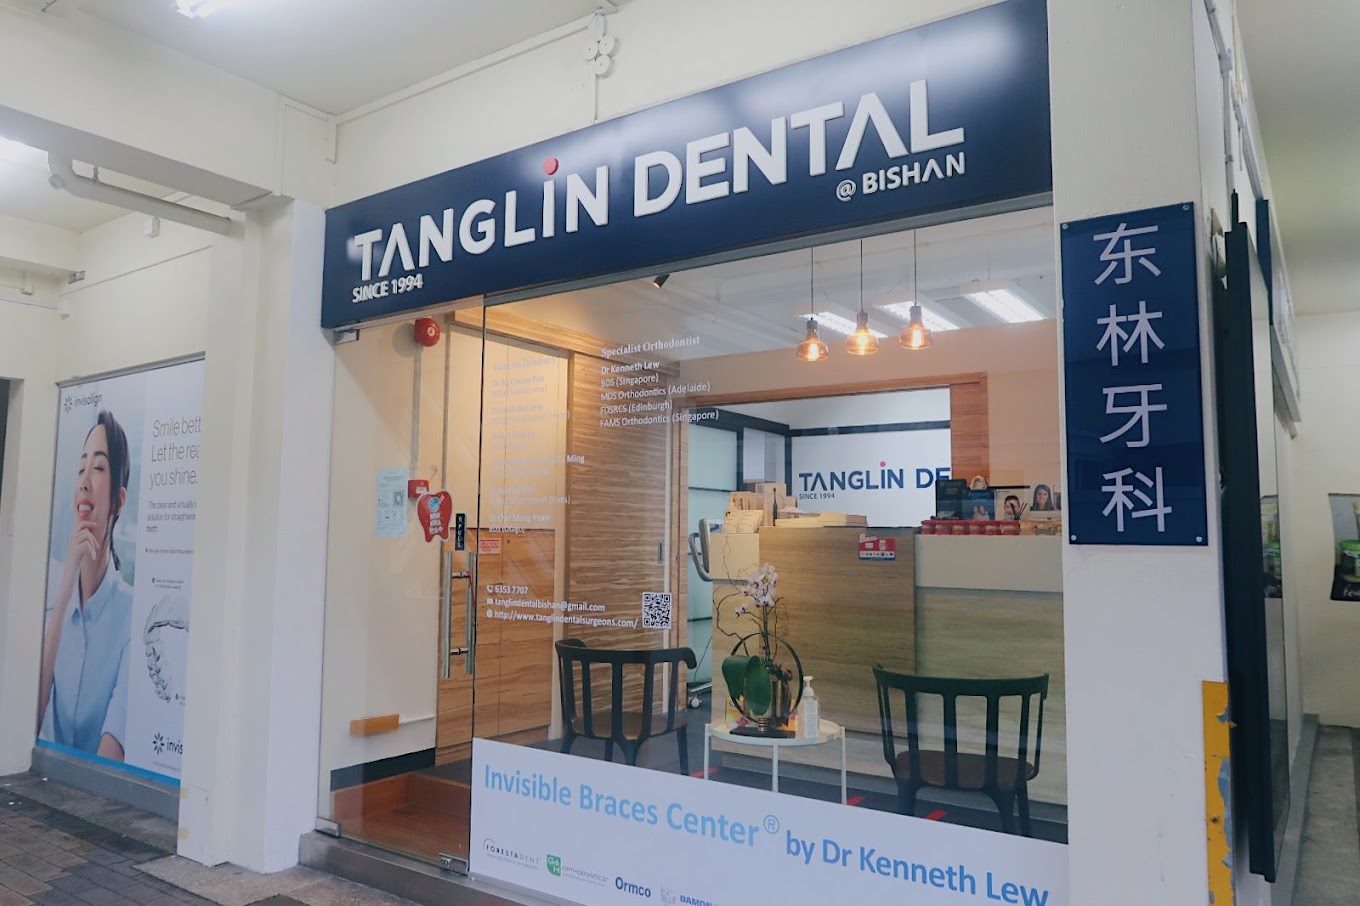 Tanglin Dental Bishan, Singapore